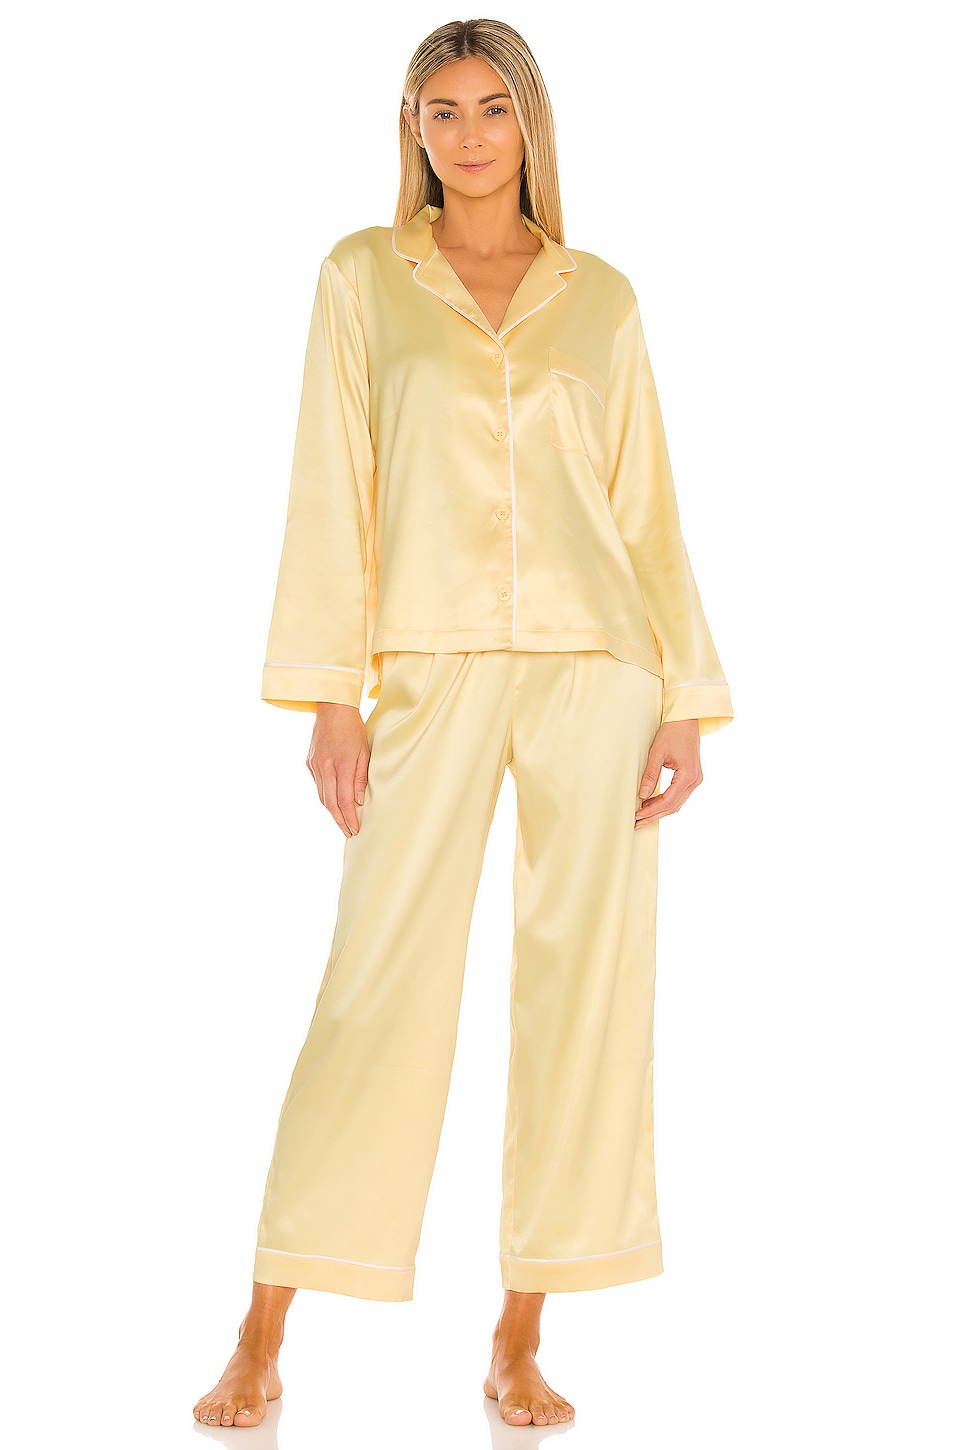 Generation Love Nikki Pajama Set in Pastel Yellow & White | REVOLVE